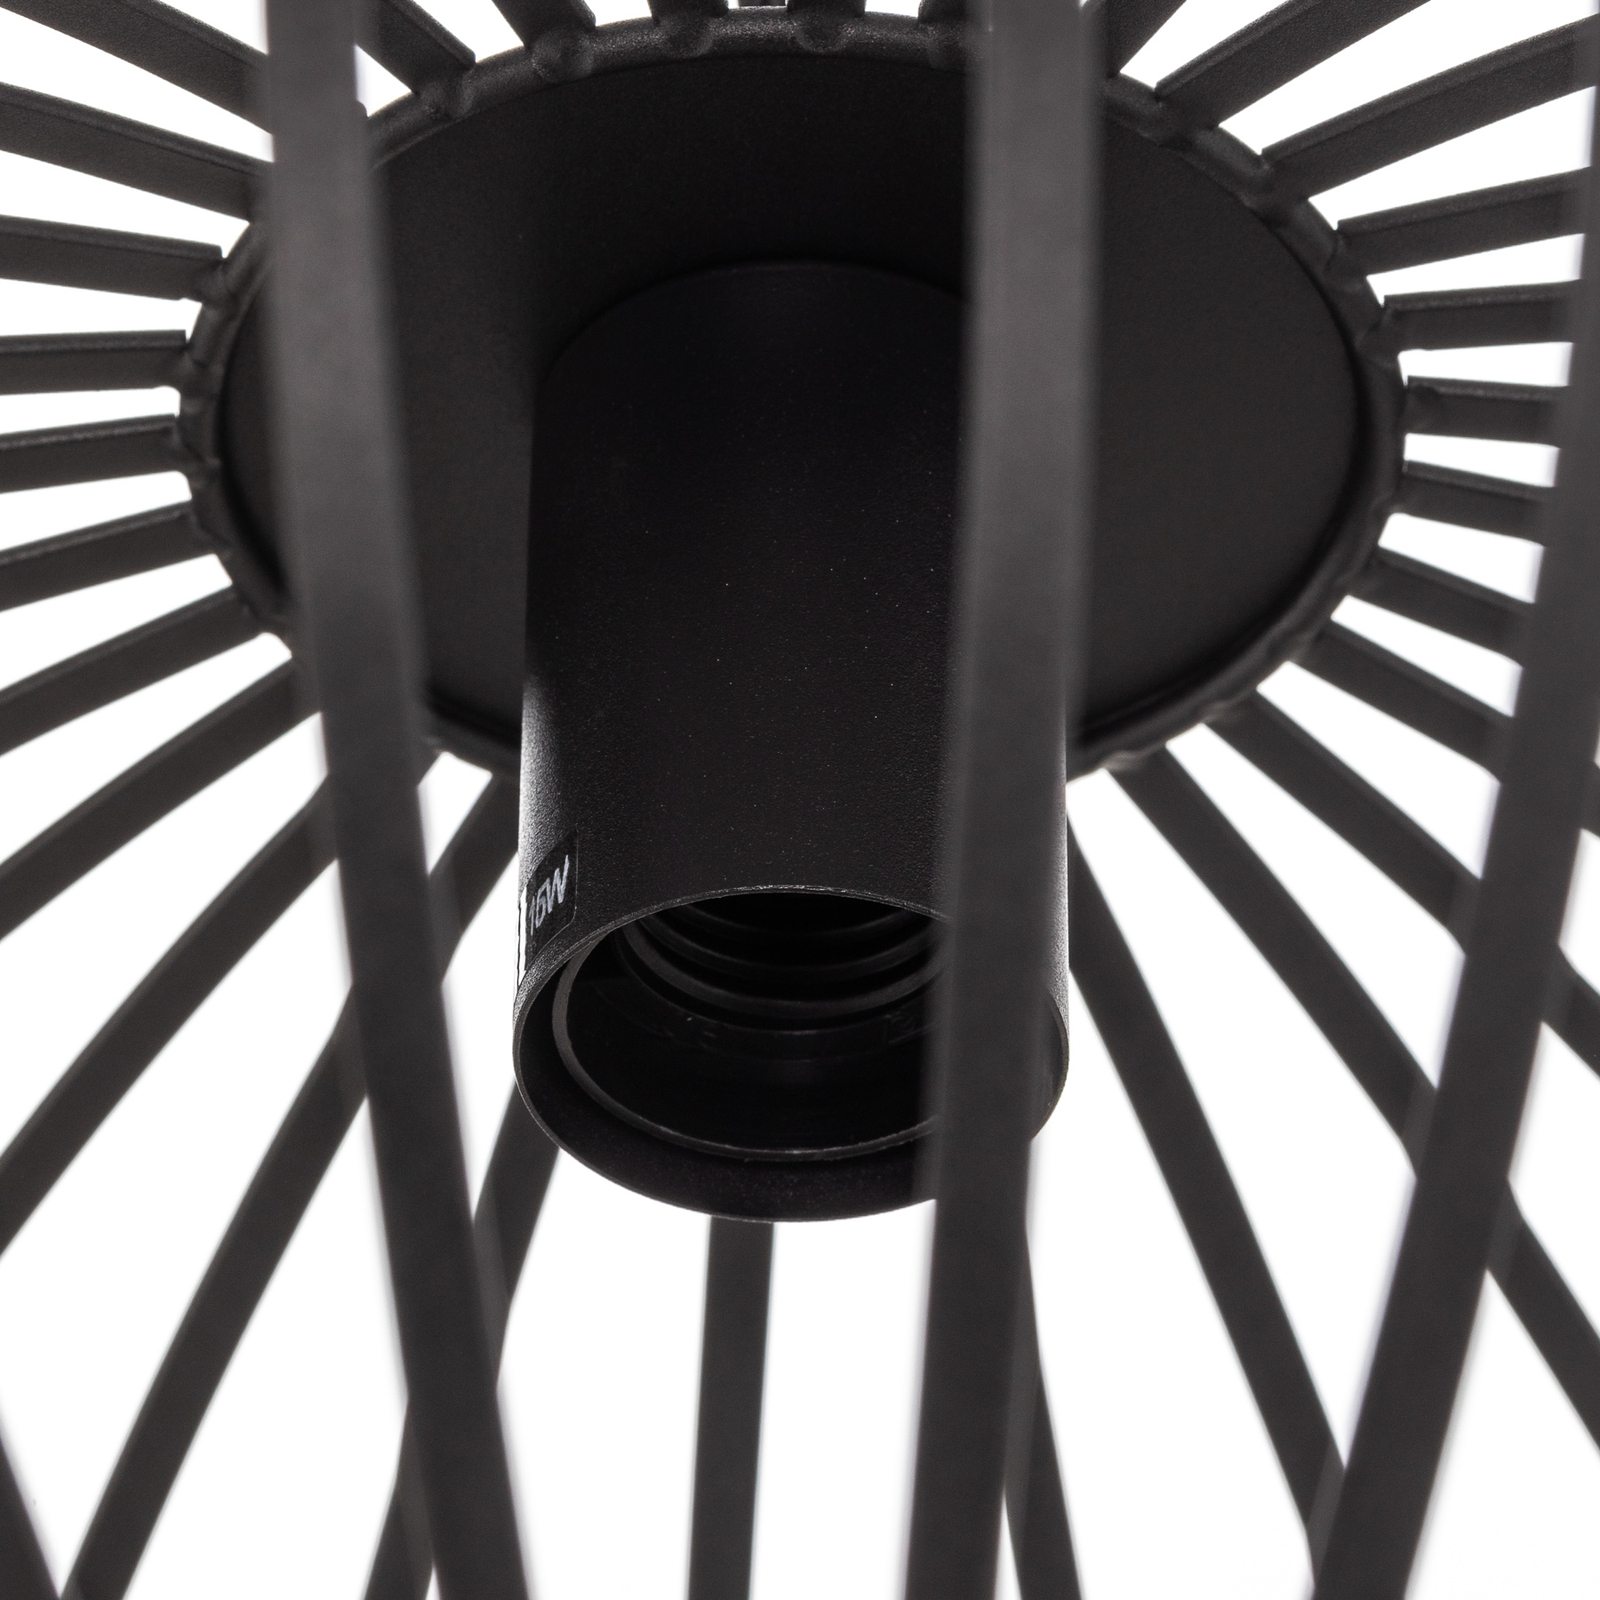 Lindby Maivi pendant light, black, 40 cm, iron, cage